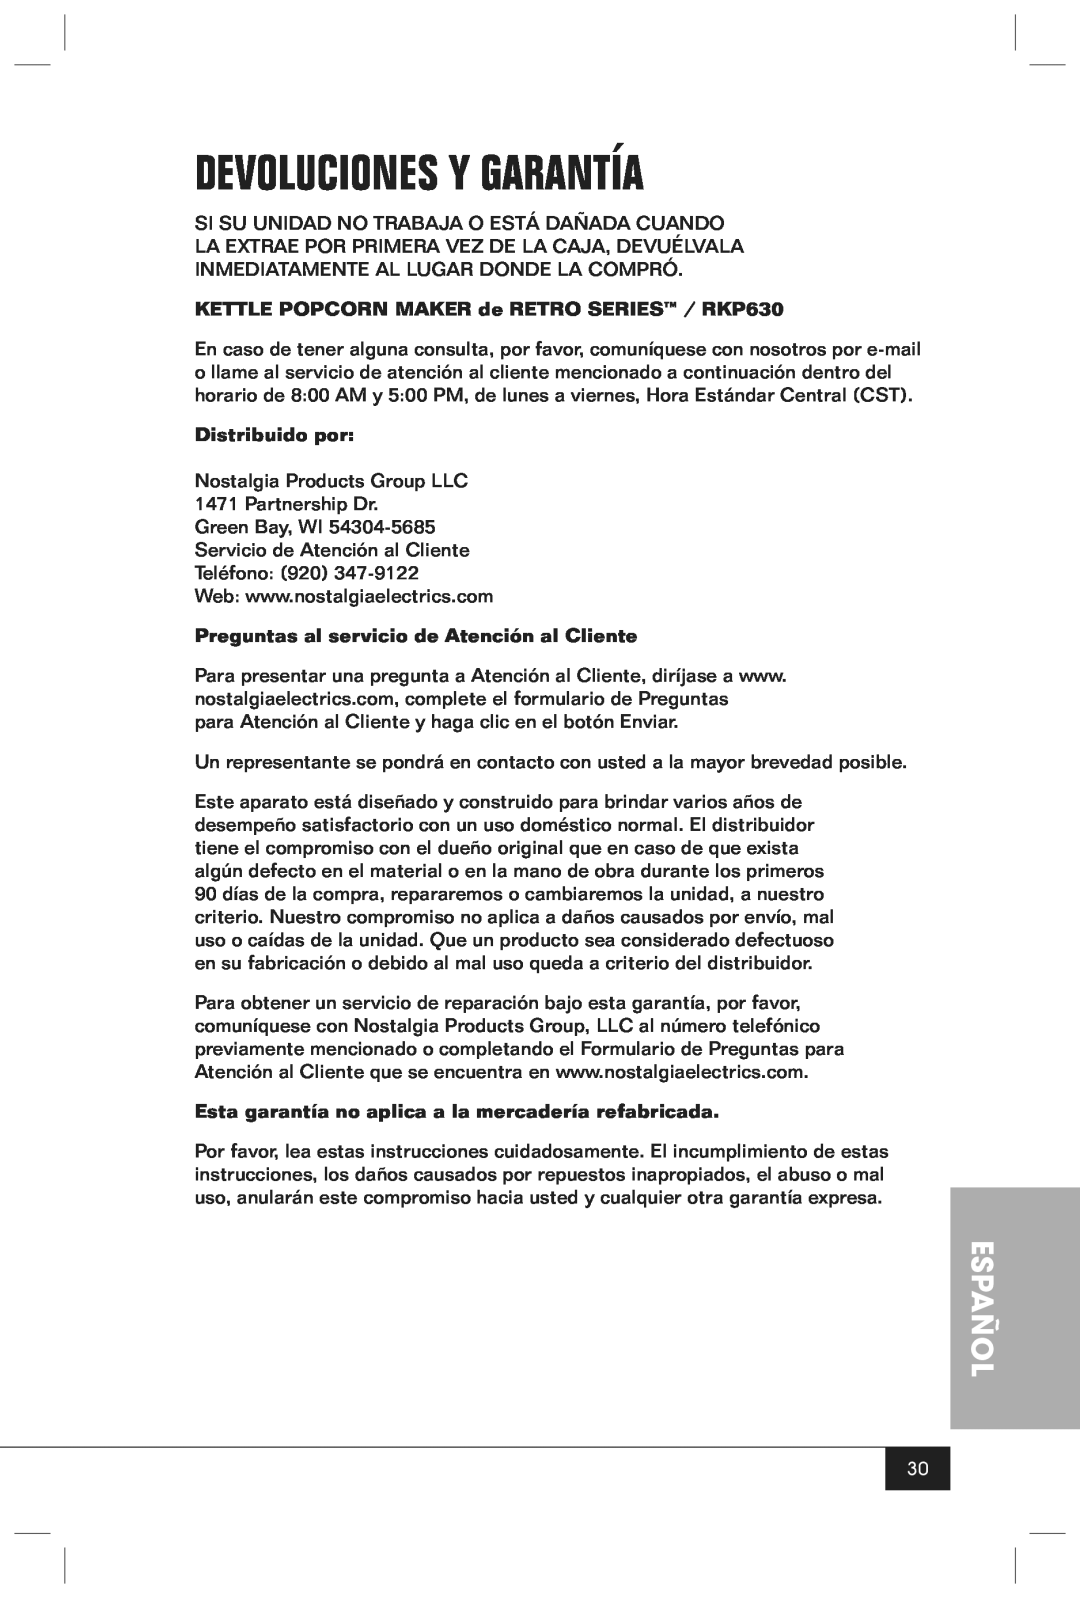 Nostalgia Electrics RKP630SERIES manual Devoluciones Y Garantía, Español, KETTLE POPCORN MAKER de RETRO SERIES / RKP630 